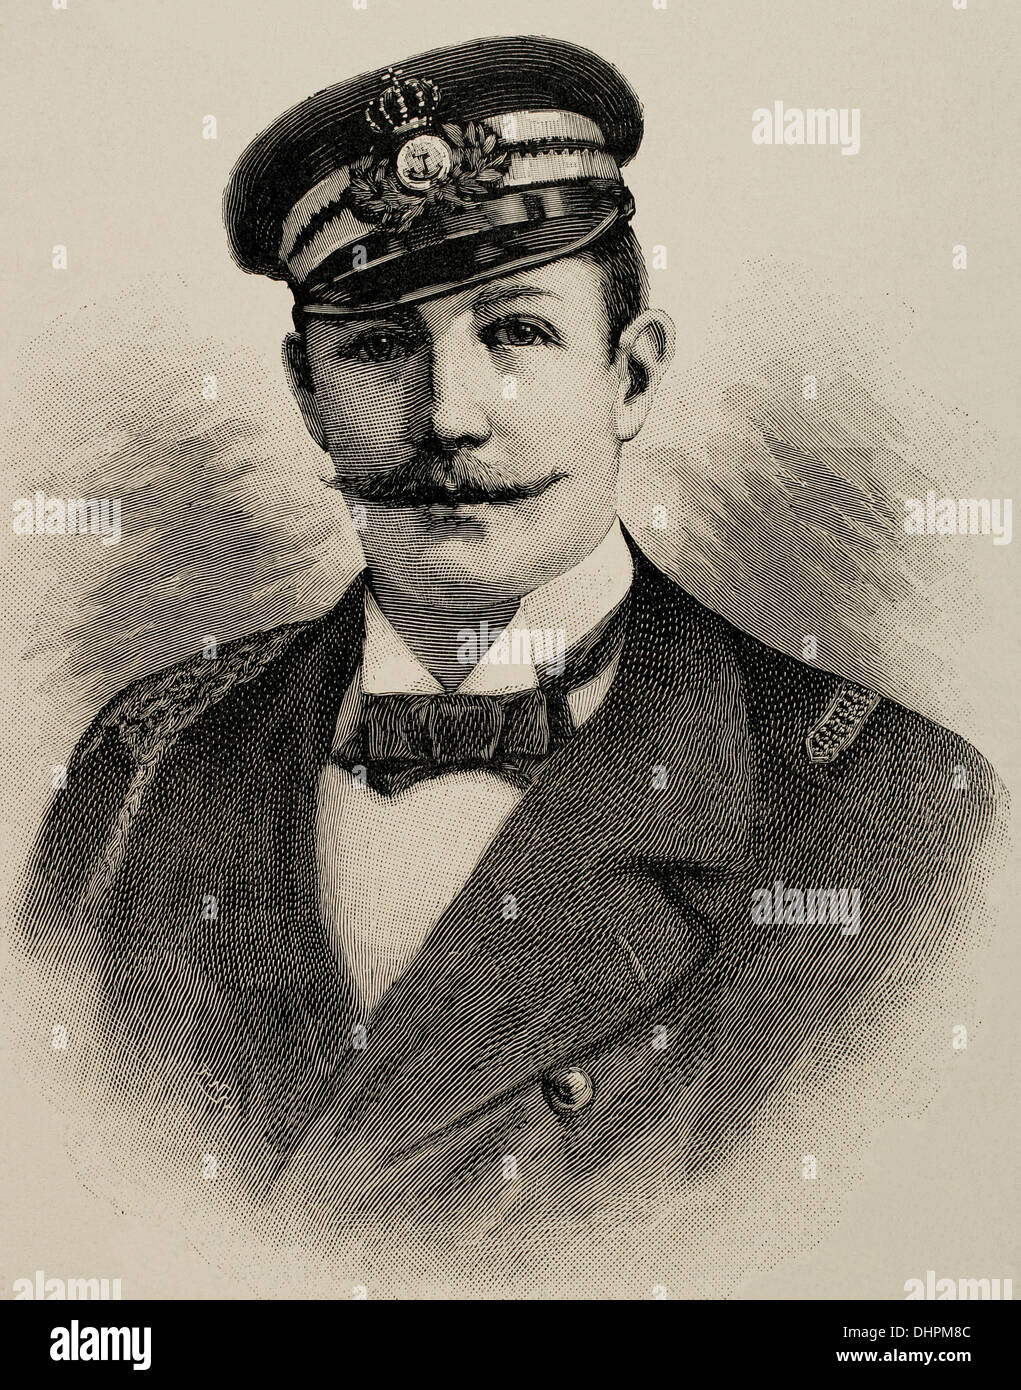 George I (1845-1913). King of Greece from 1863-1913. House of Schleswig-Holstein-Sonderburg-Glücksburg. Engraving. Stock Photo